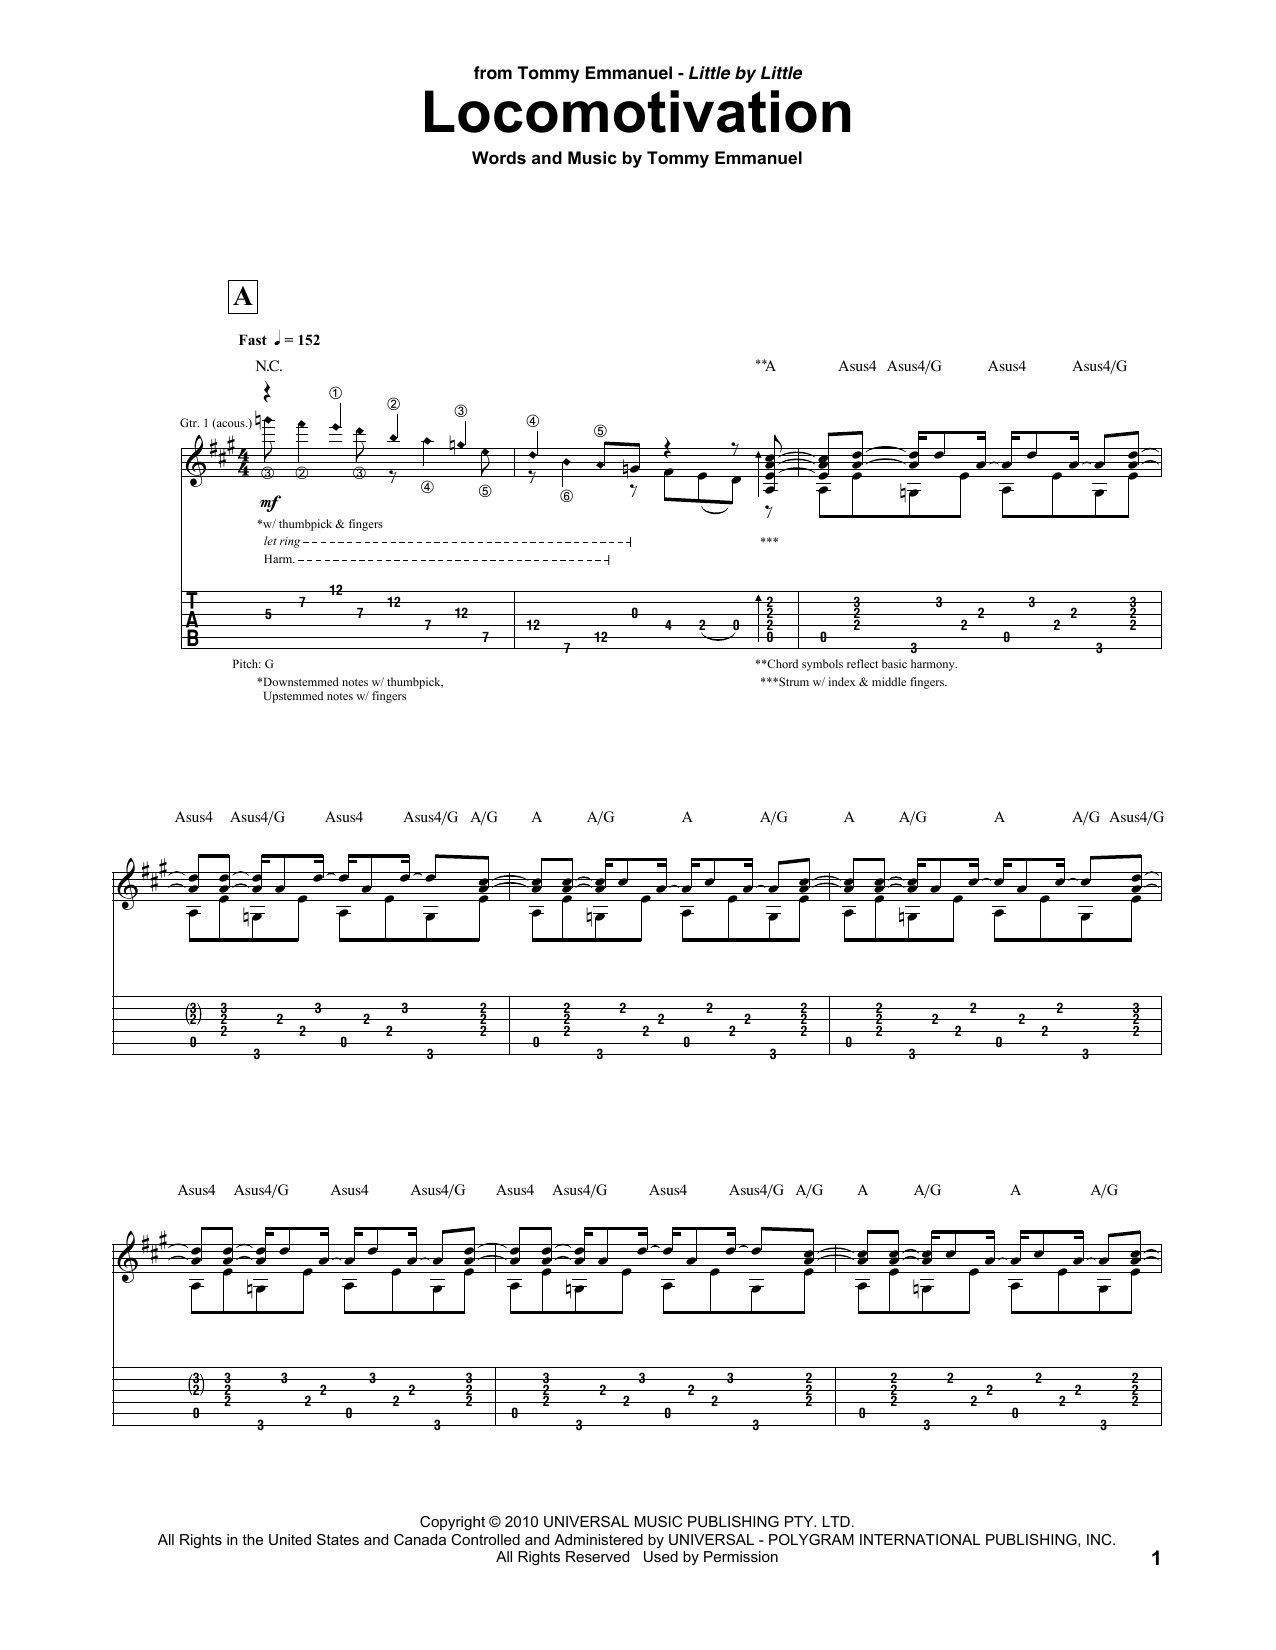 Tommy Emmanuel Locomotivation Sheet Music Notes & Chords for Guitar Tab - Download or Print PDF